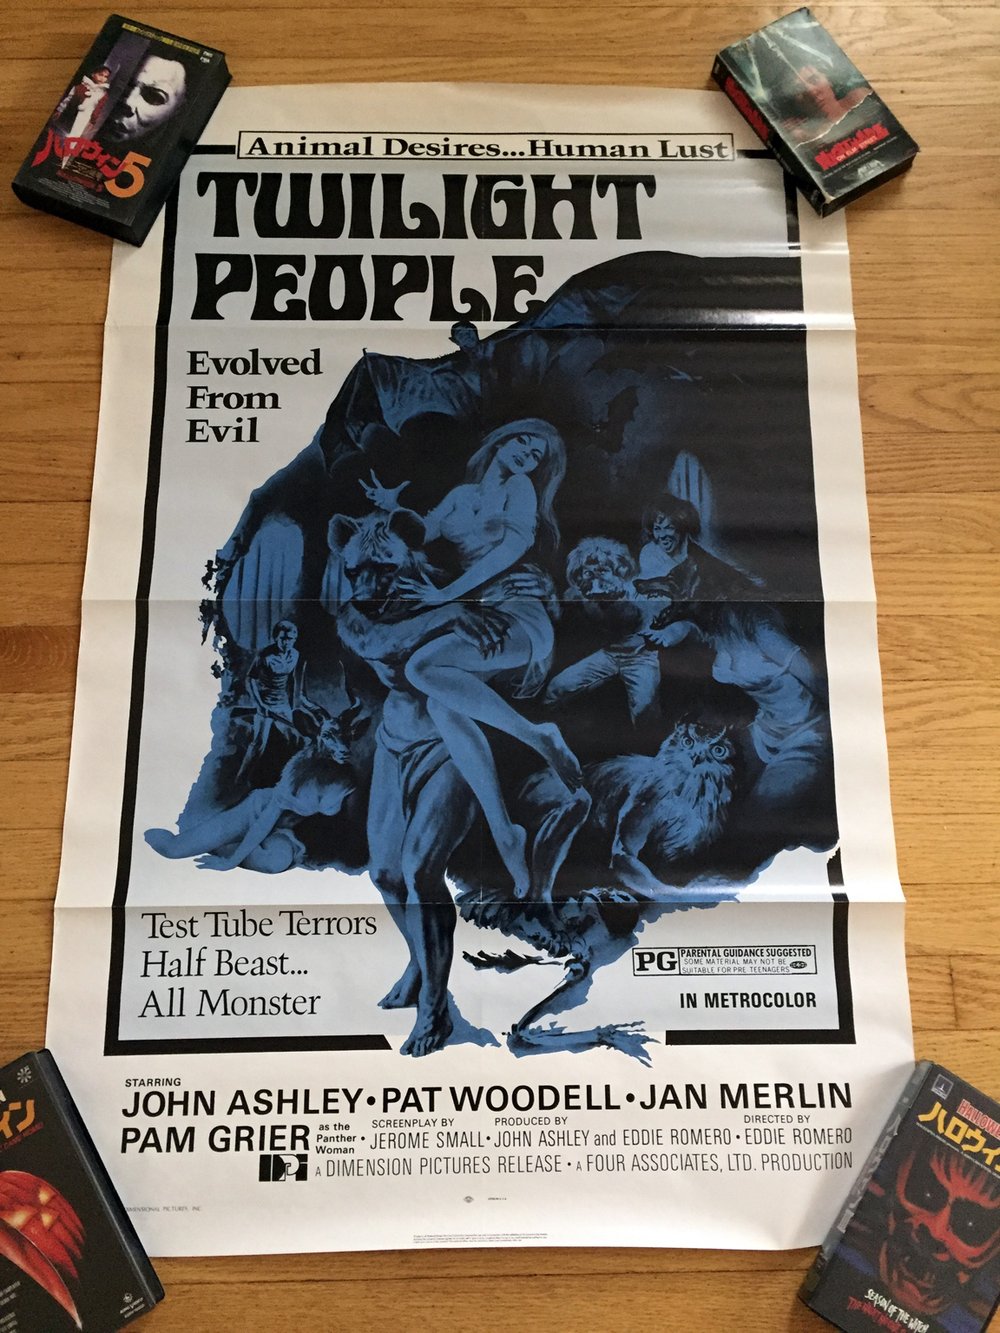 1972 THE TWILIGHT PEOPLE Original U.S. One Sheet Movie Poster